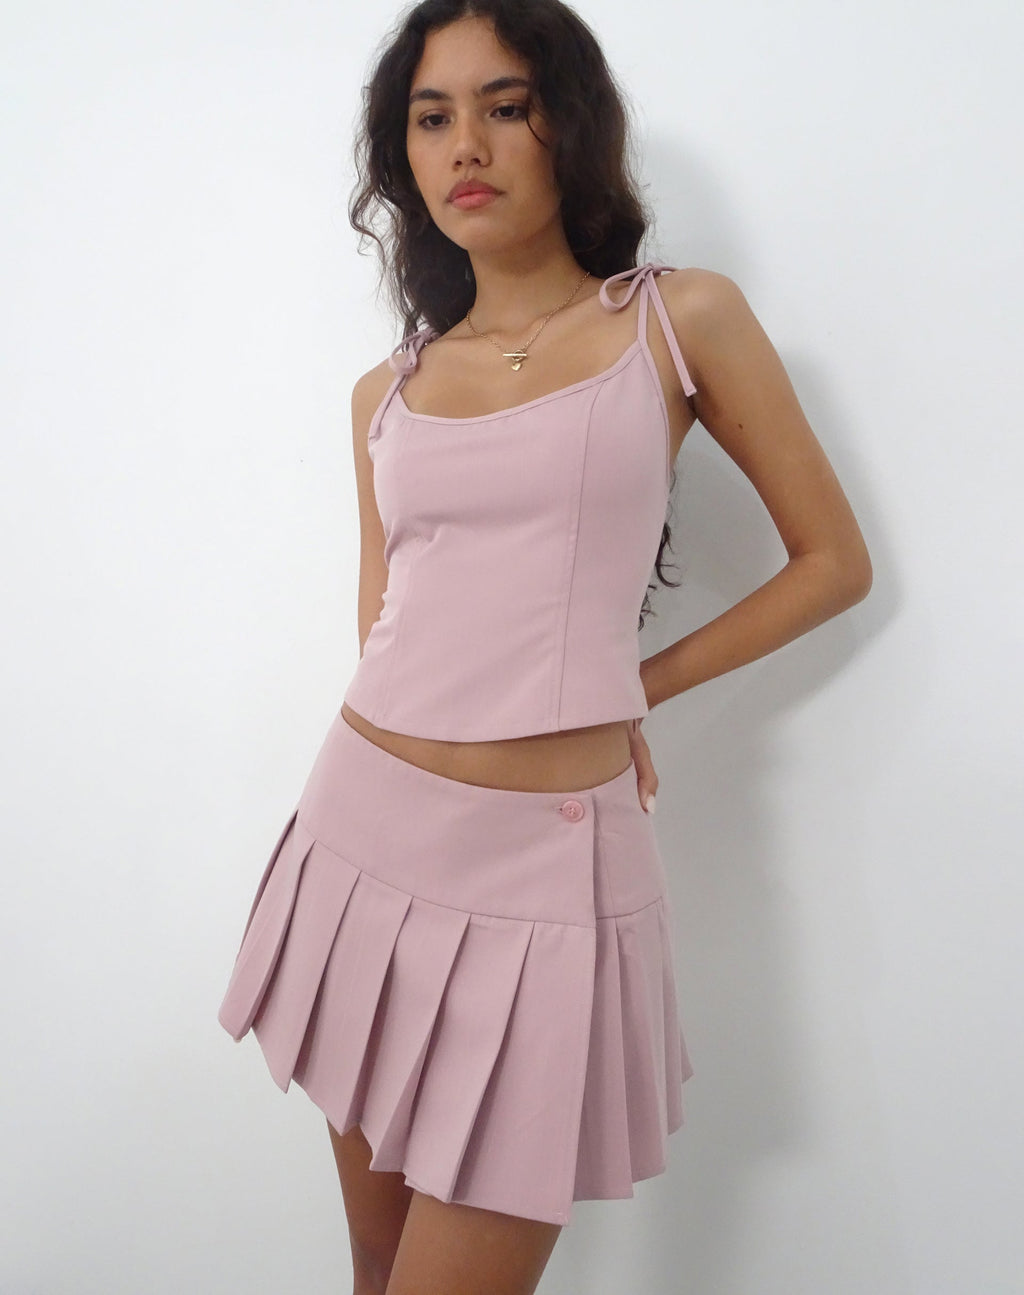 Sydney So Sleek, with Cami Charm skirt, Hear Me Roar co…, www.missvinyl.com